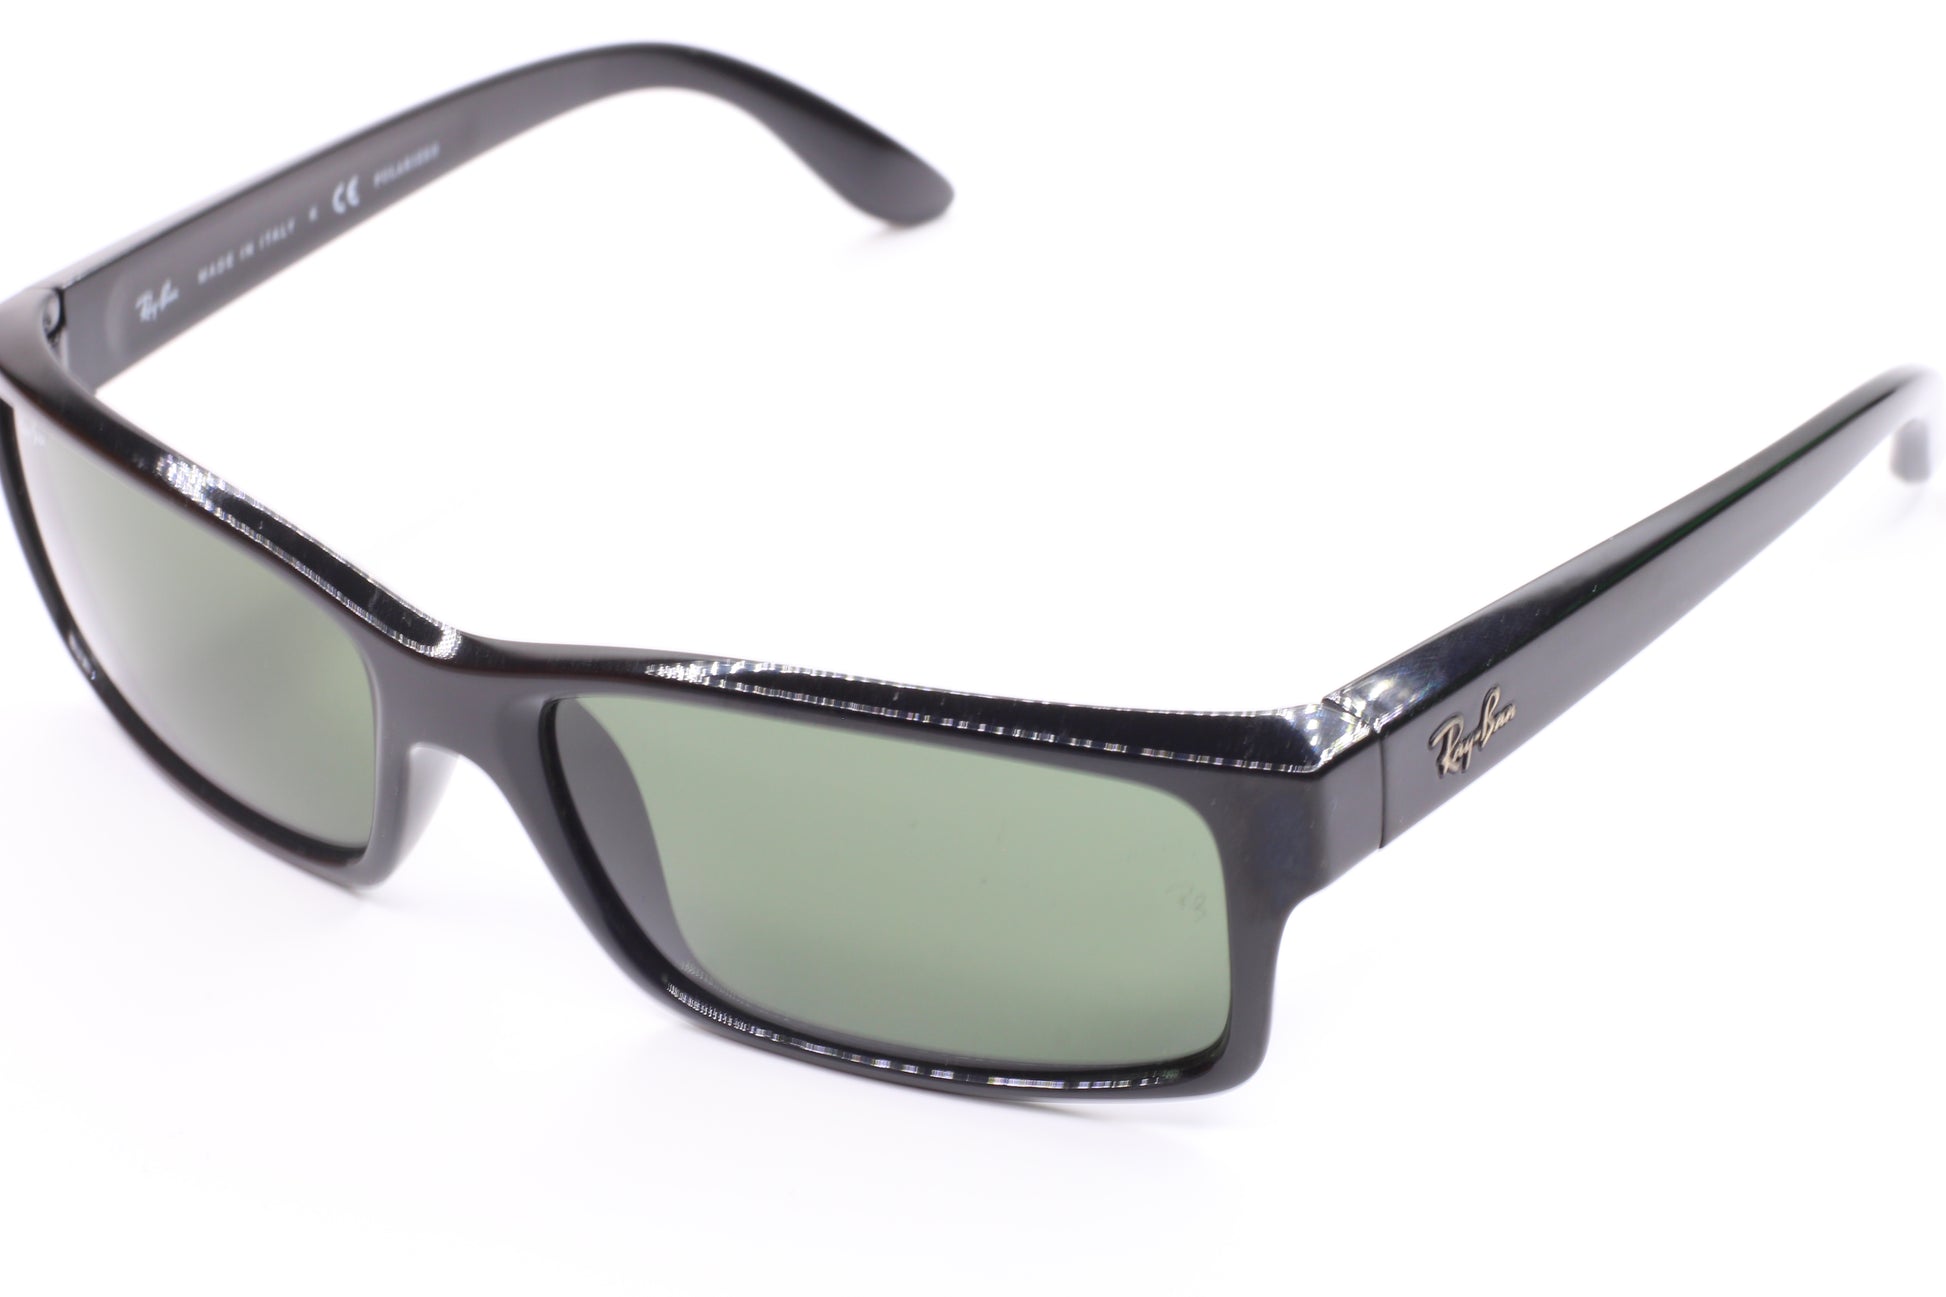 Ray-Ban RB4151 601 Black Polished Rectangle Green Lens G15 Luxury Sunglasses - Men, sunglasses